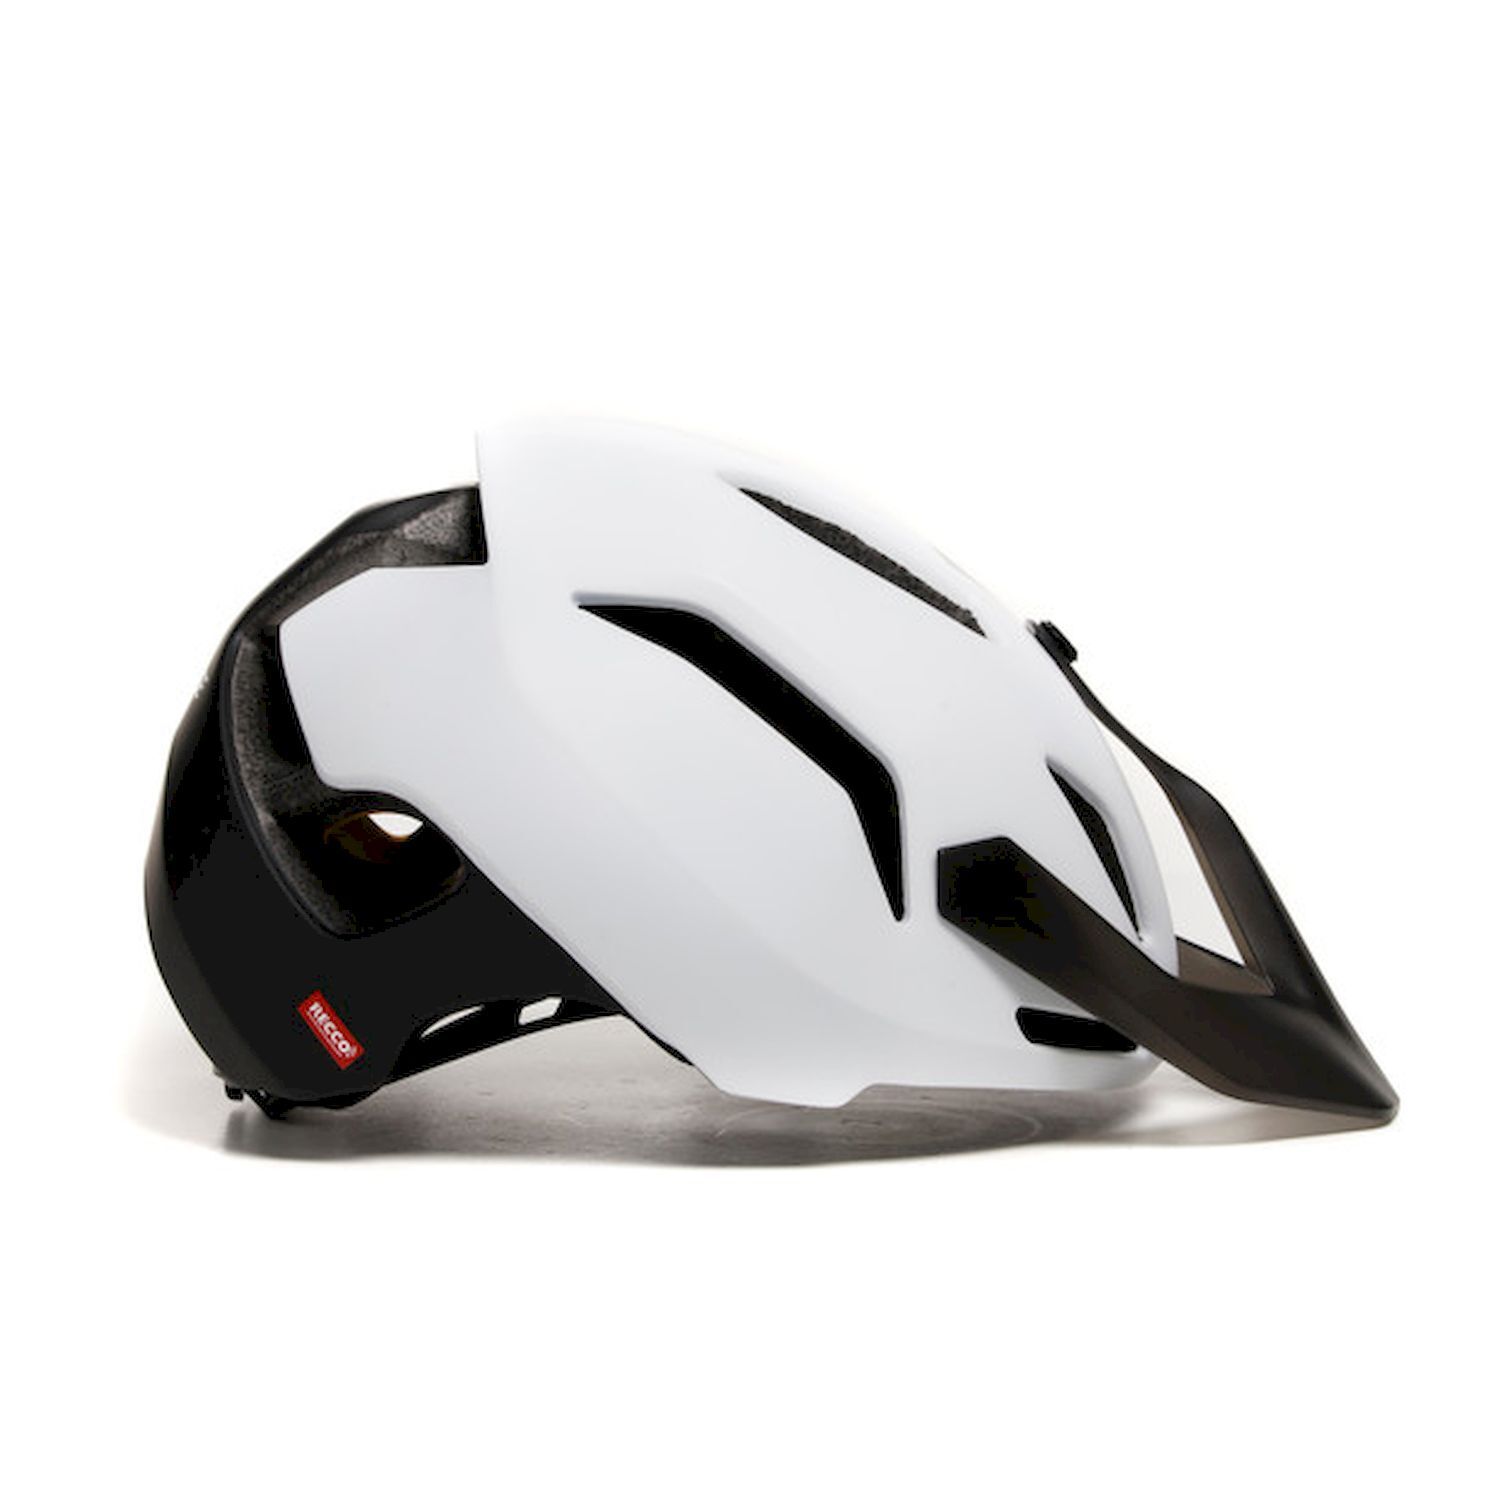 Linea 03 MIPS - MTB-Helmet